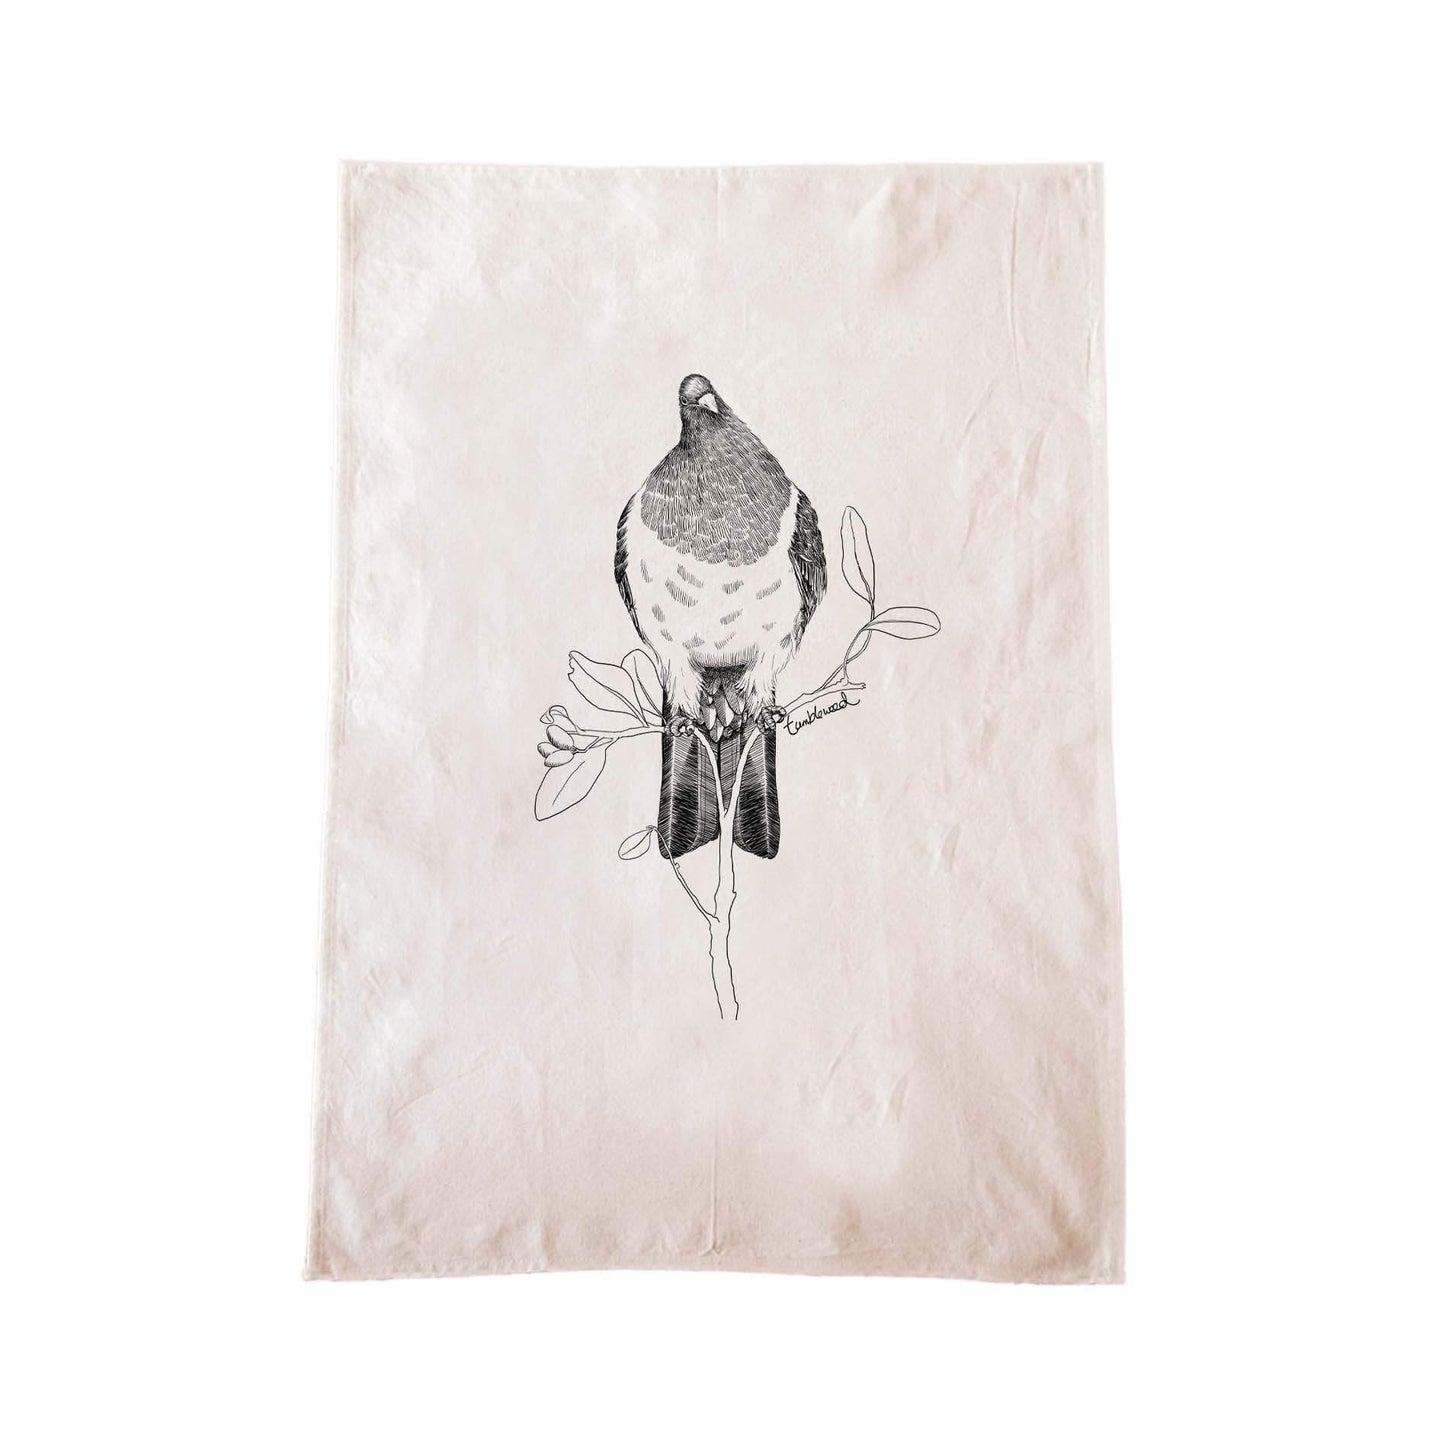 Off-white cotton tea towel with a screen printed Kererū design.